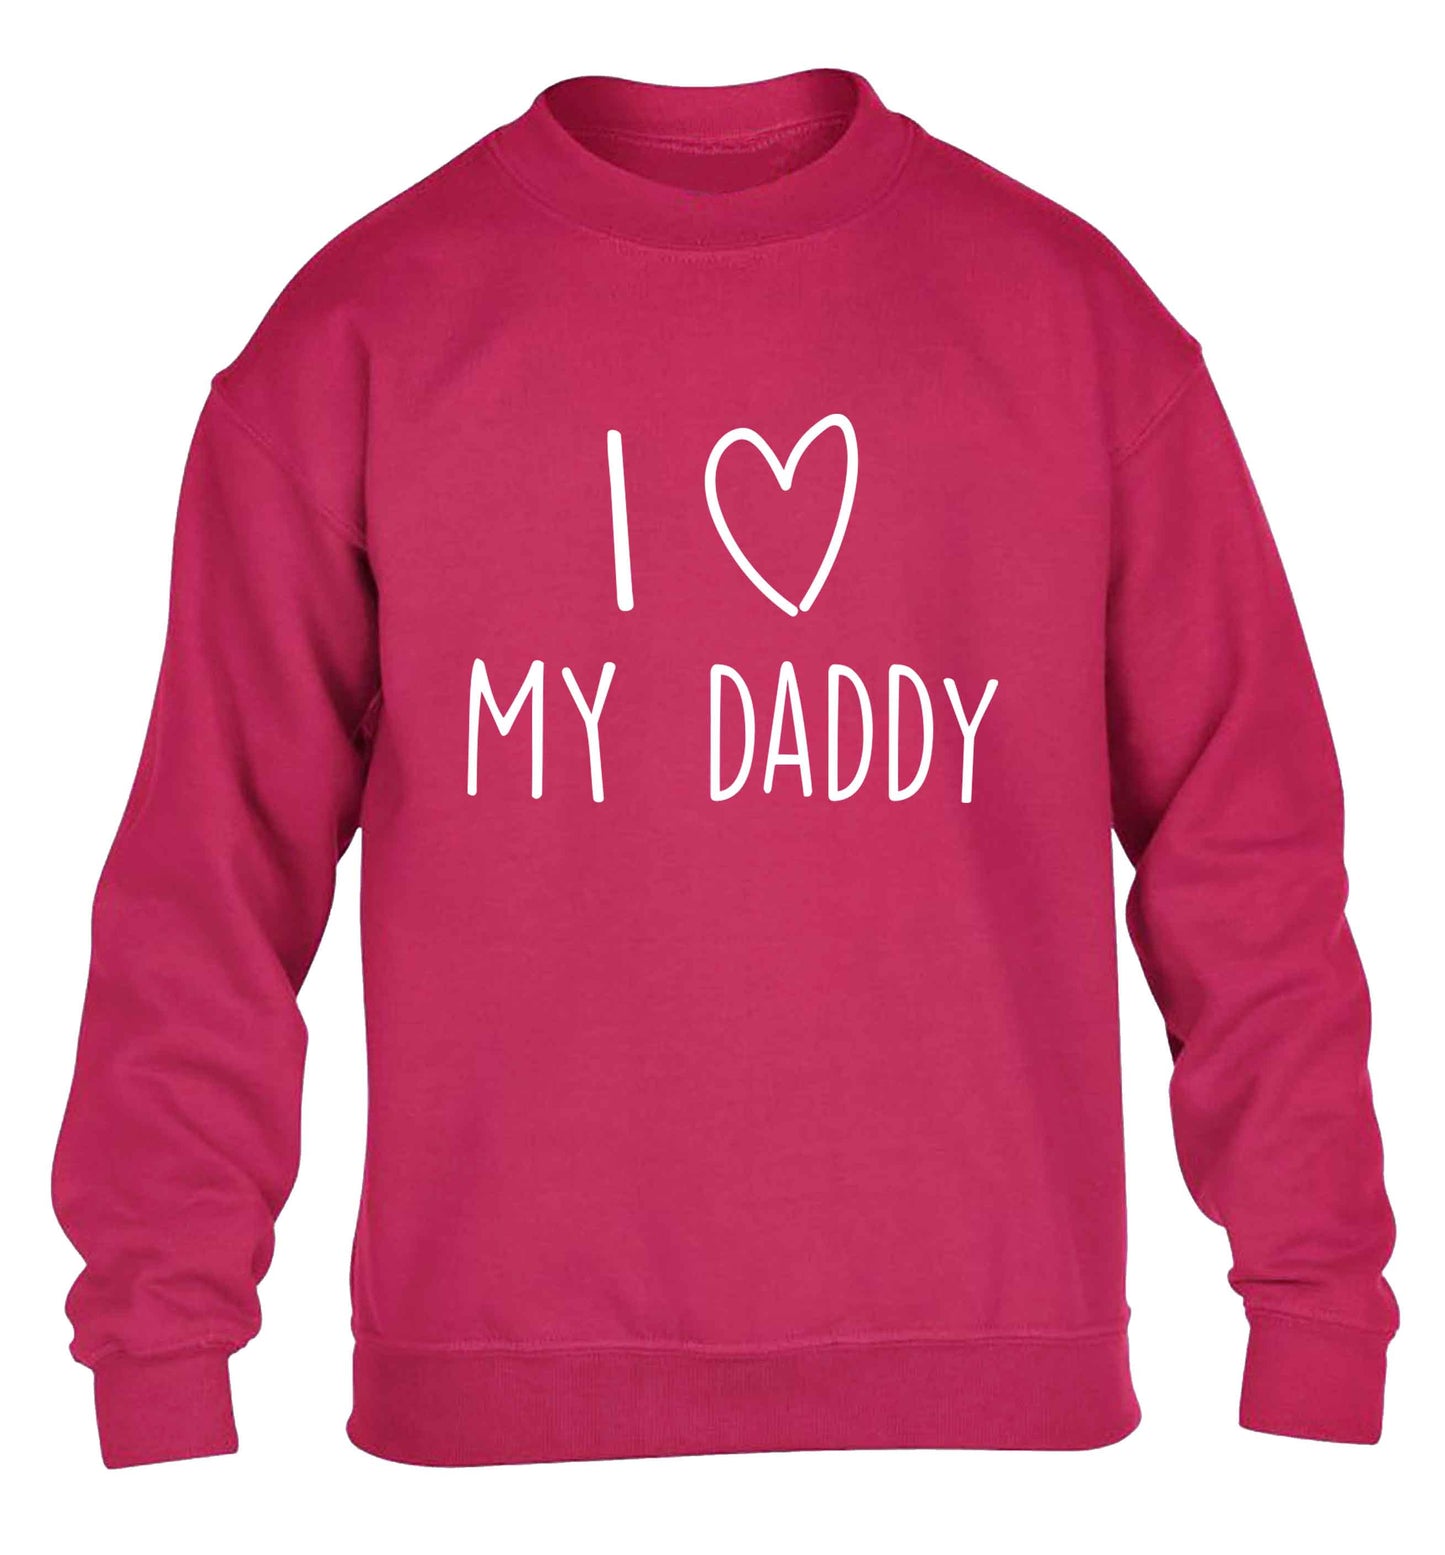 I love my daddy children's pink sweater 12-13 Years